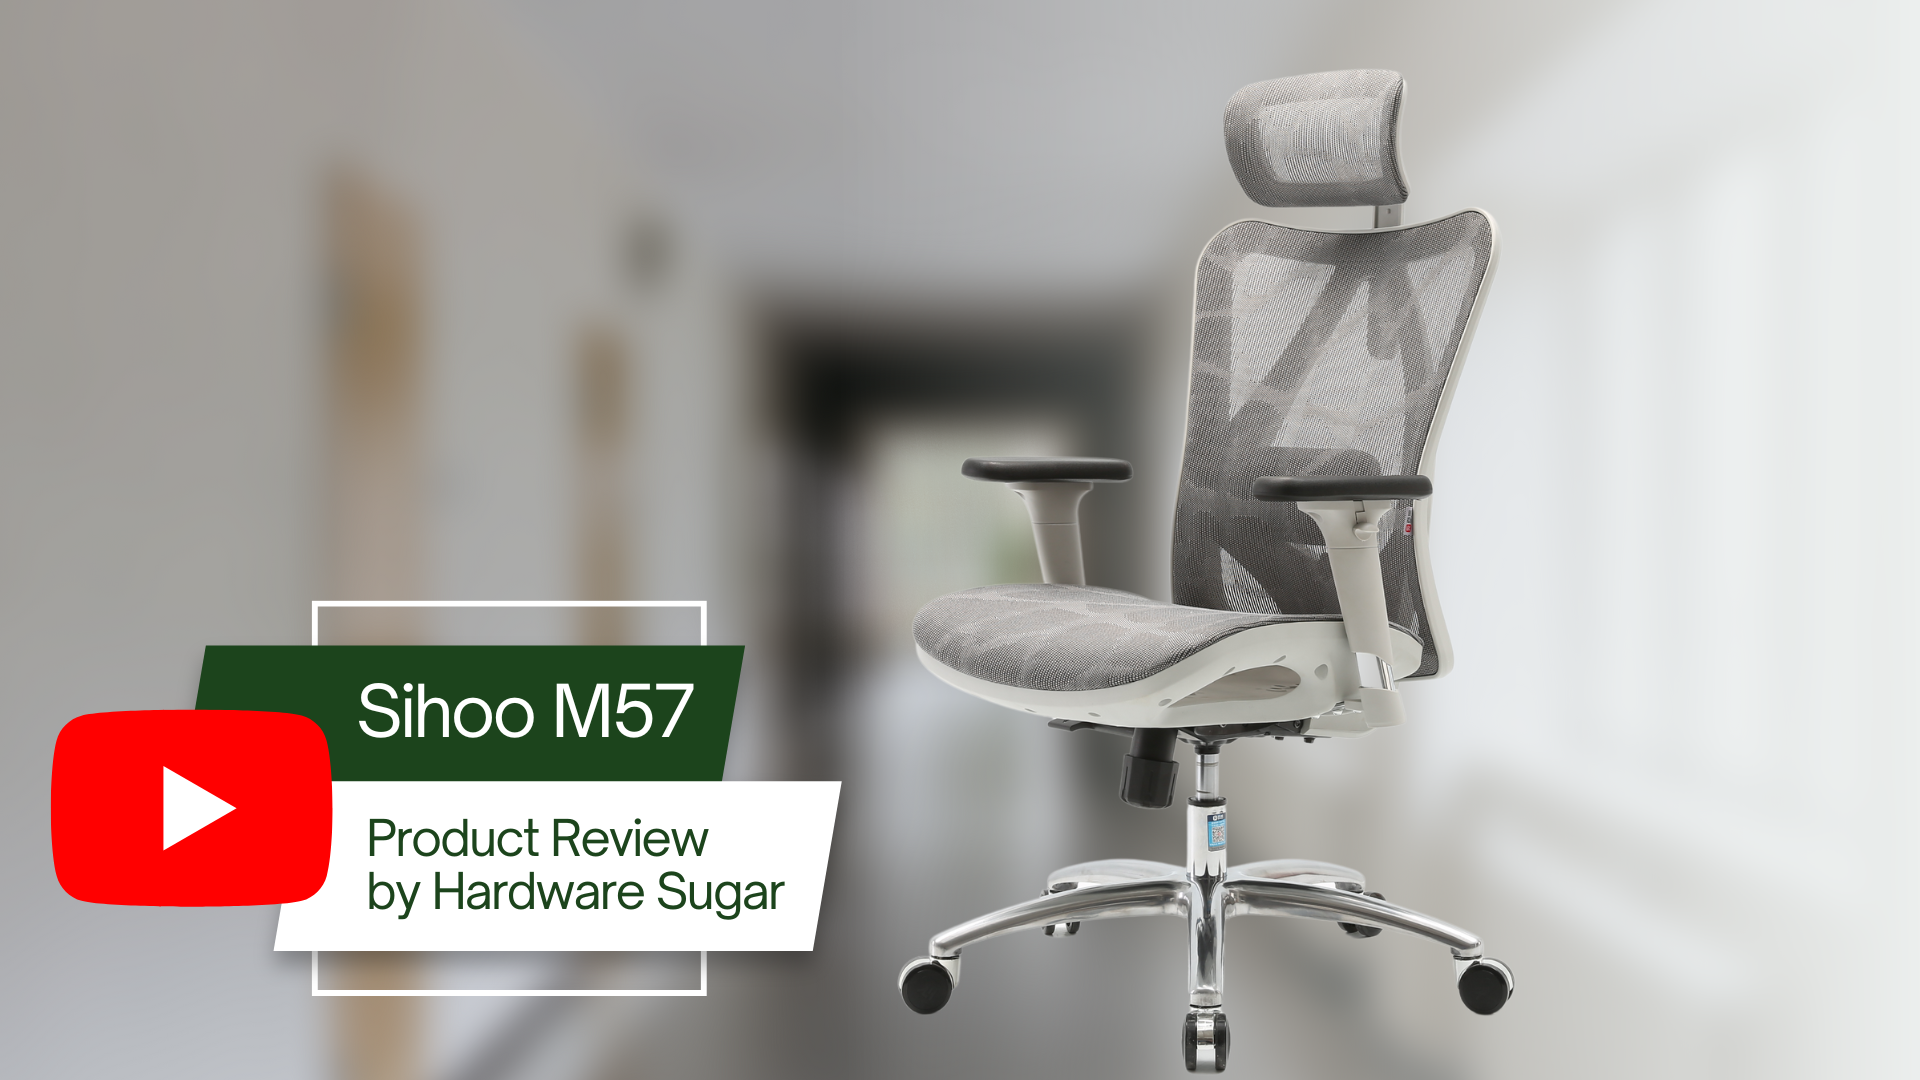 Load video: TWU PH x Sihoo M57 Ergonomic Chair Review by Hardware Sugar